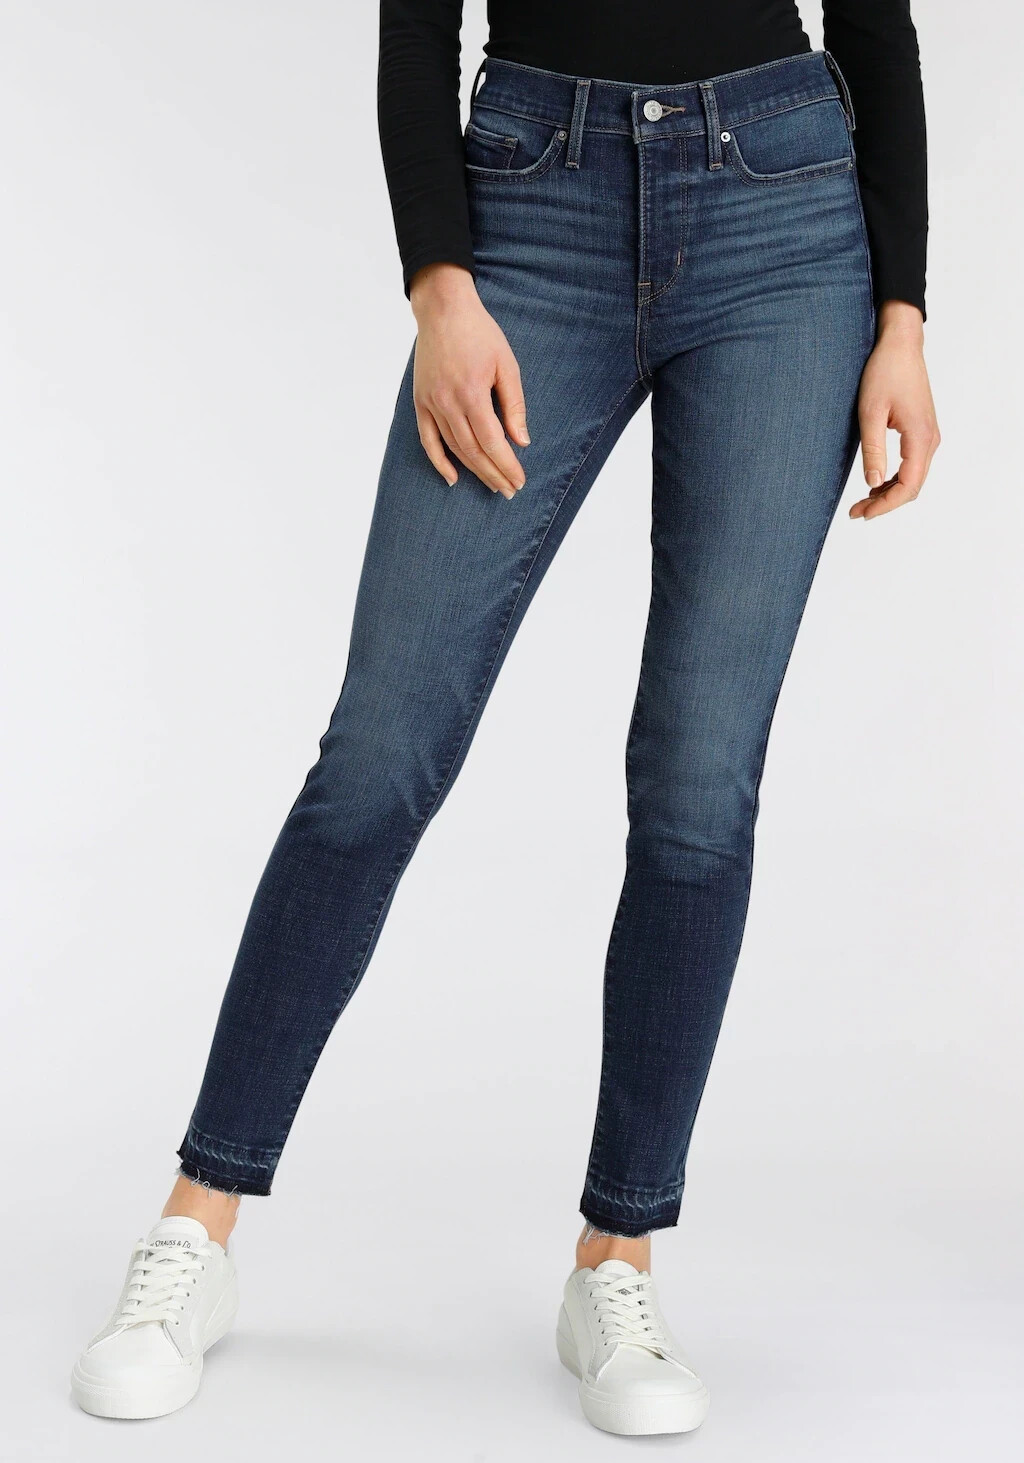 Levi's Women's 311 Shaping Mid Rise Skinny Jeans - Medium Indigo